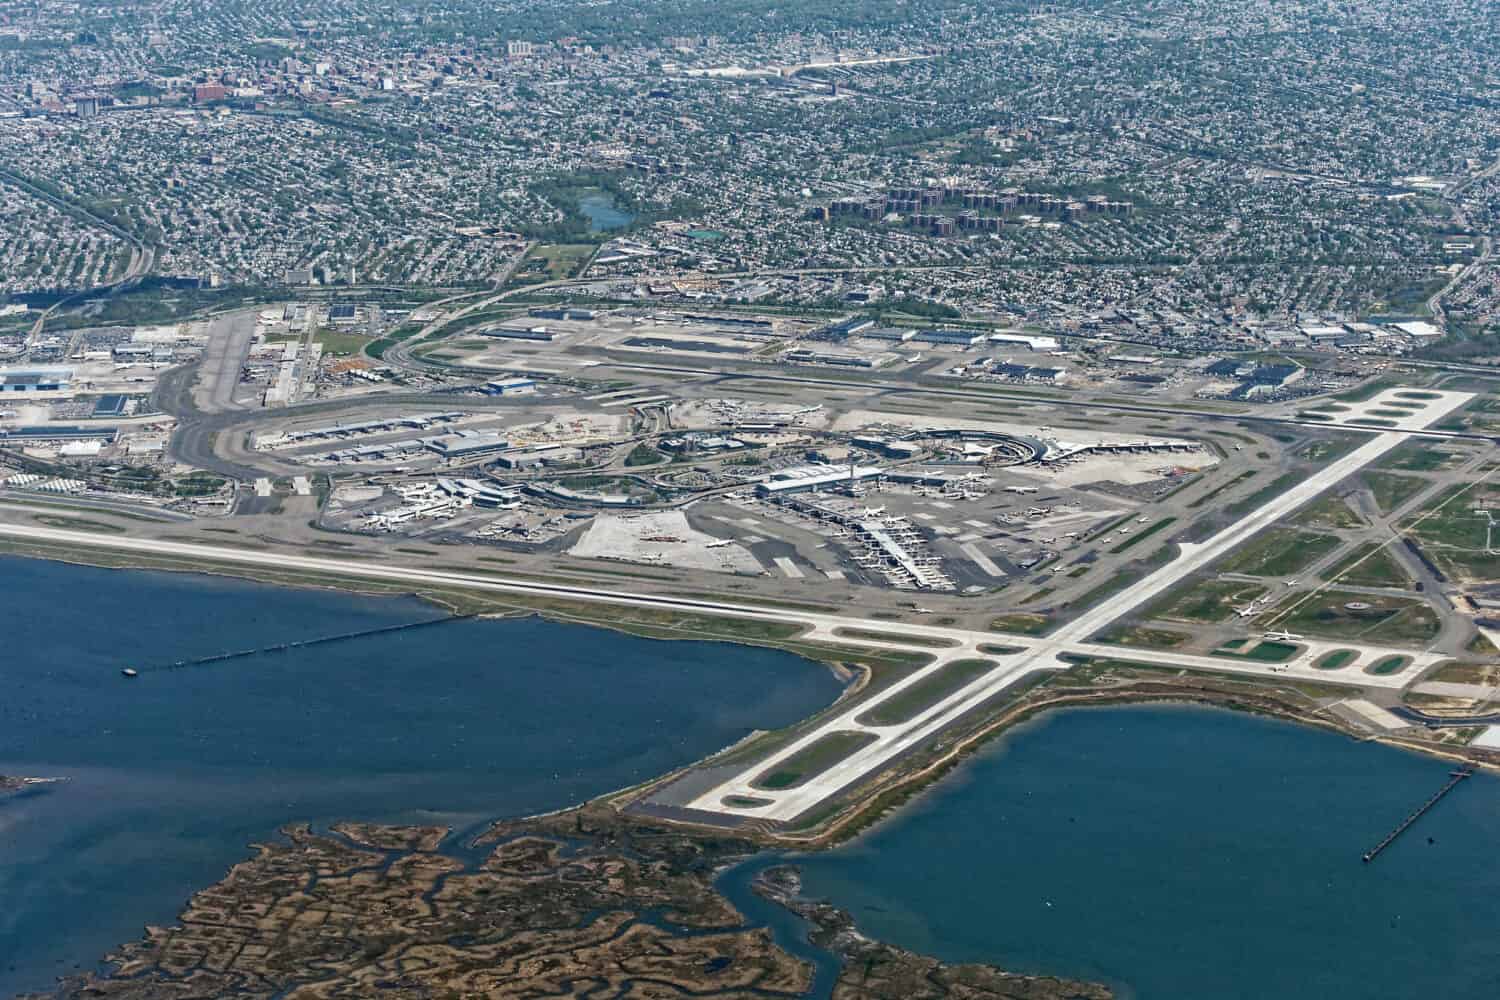 Aerial view of JFK airport, New York